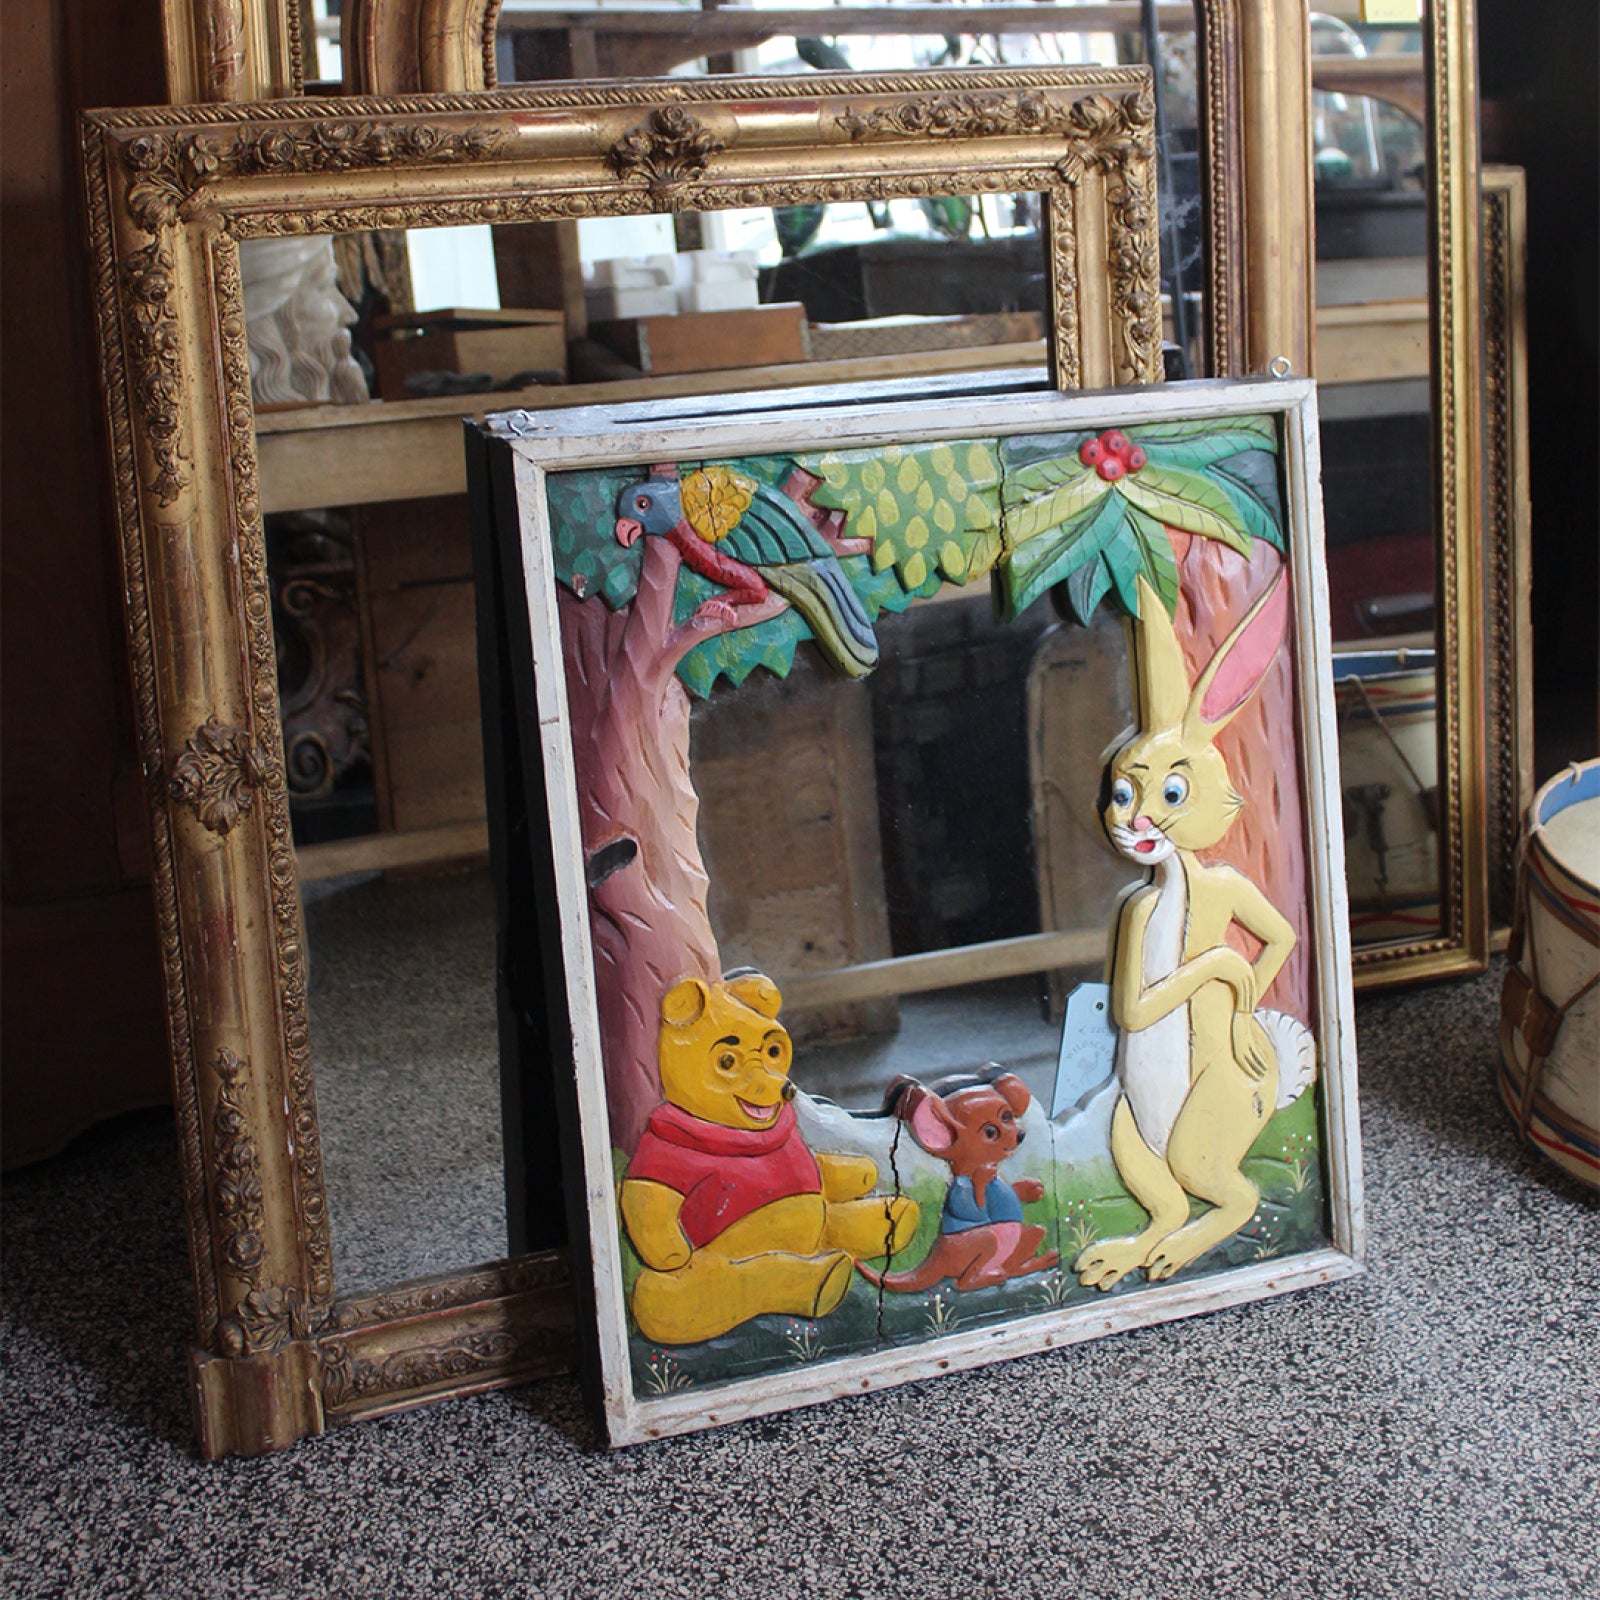 Vintage Winnie-the-Pooh Folk Art Style Mirror